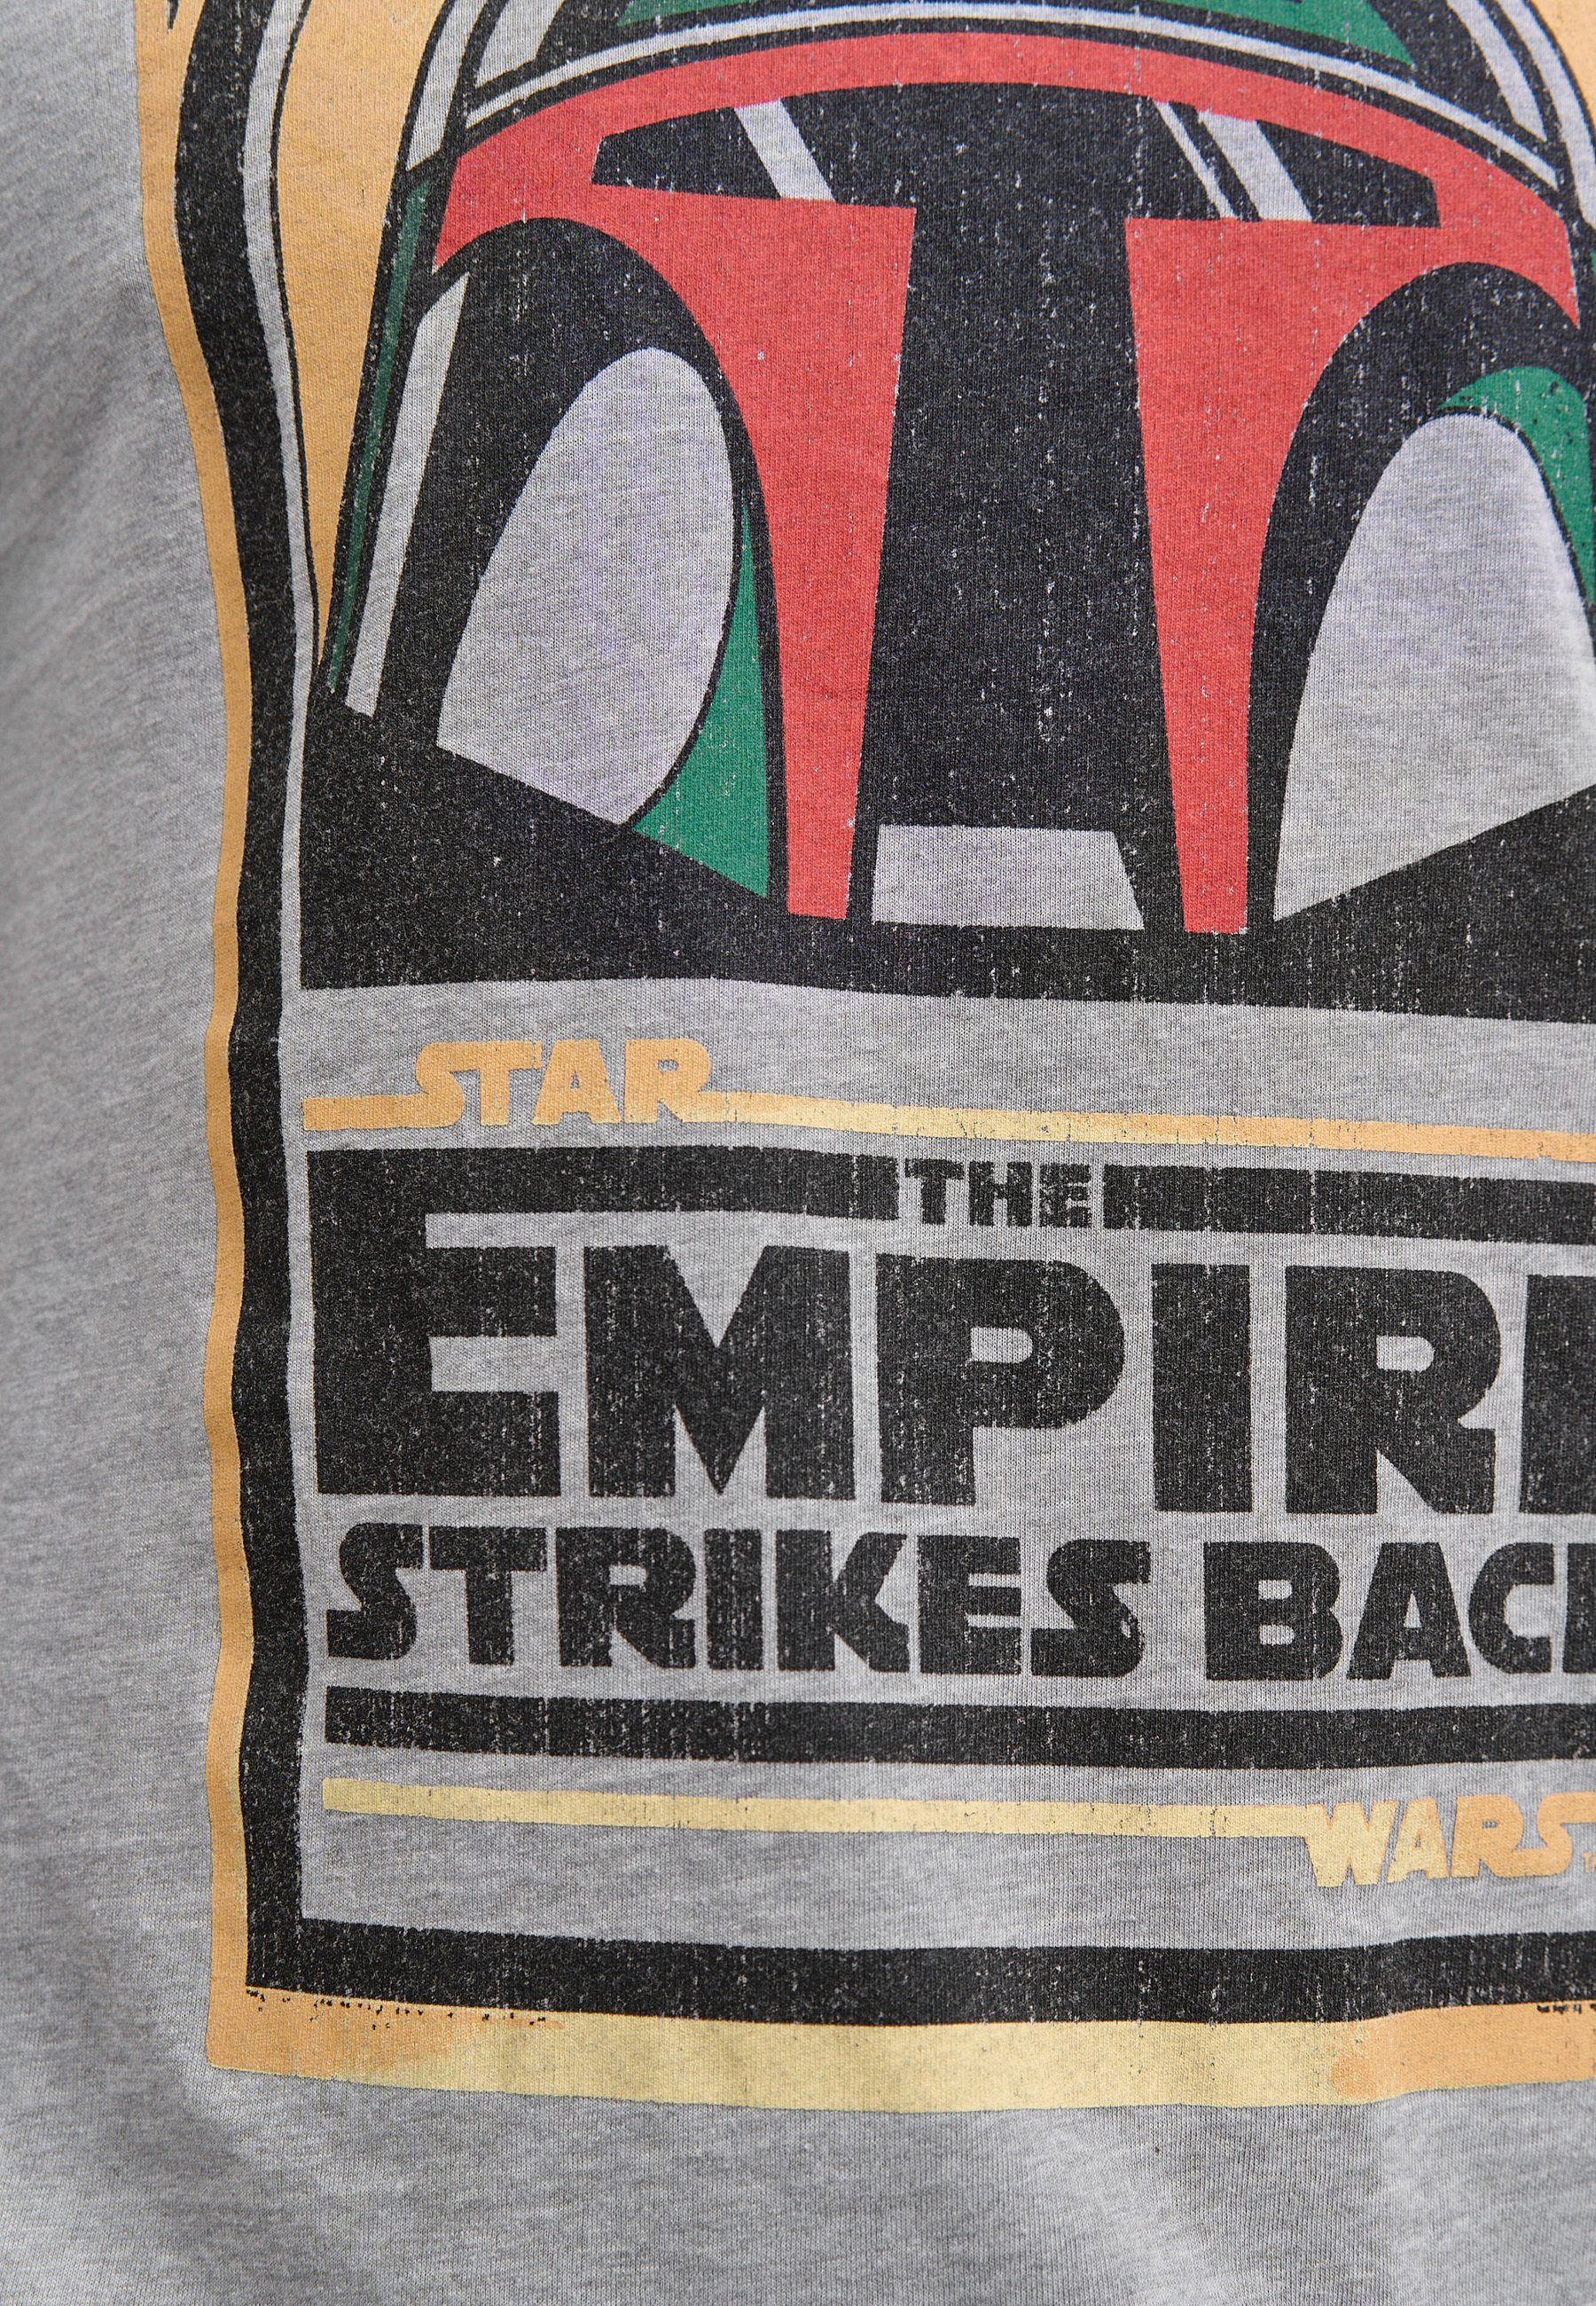 Boba Back Hellgrau Strikes T-Shirt Wars Empire Fett Recovered Star